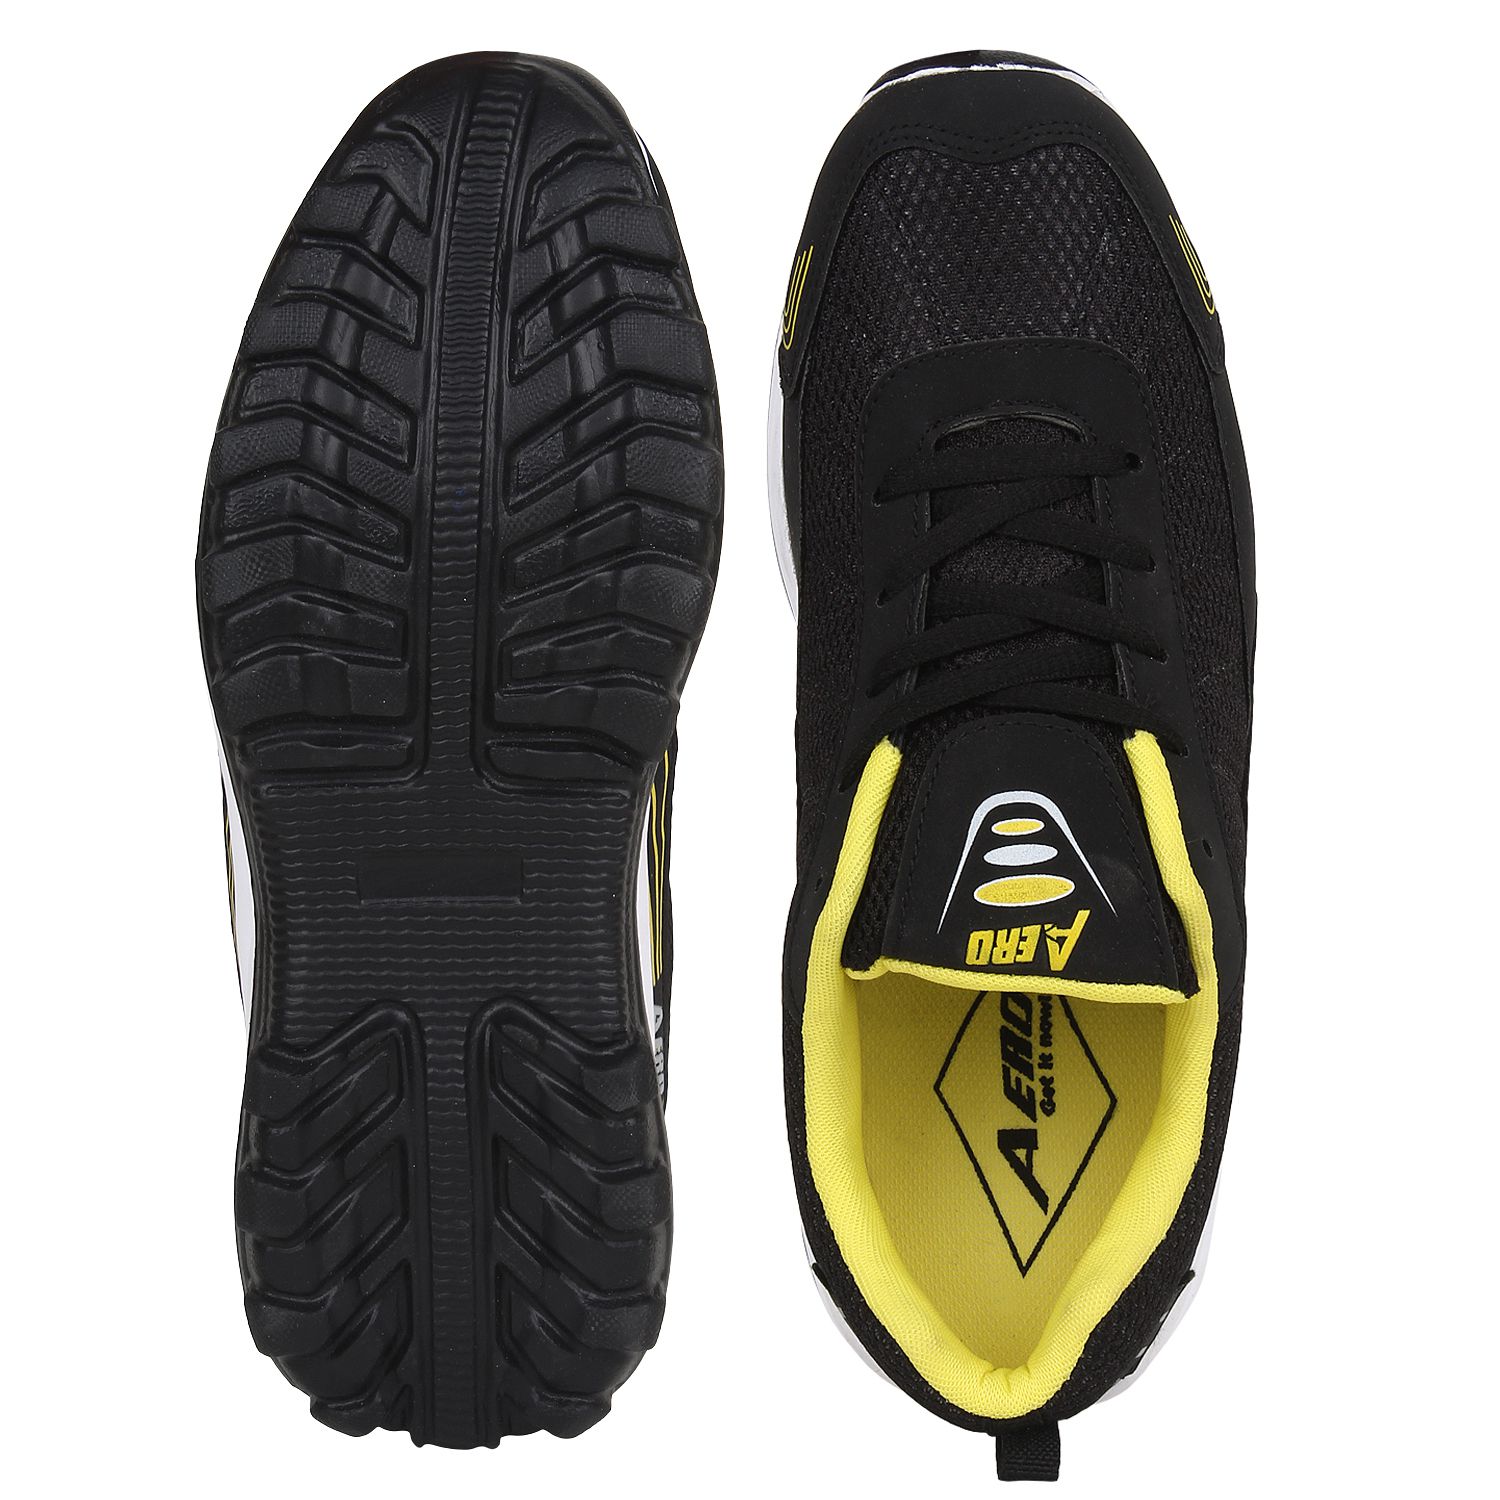 Aero Black Running Shoes - Buy Aero Black Running Shoes Online at Best ...